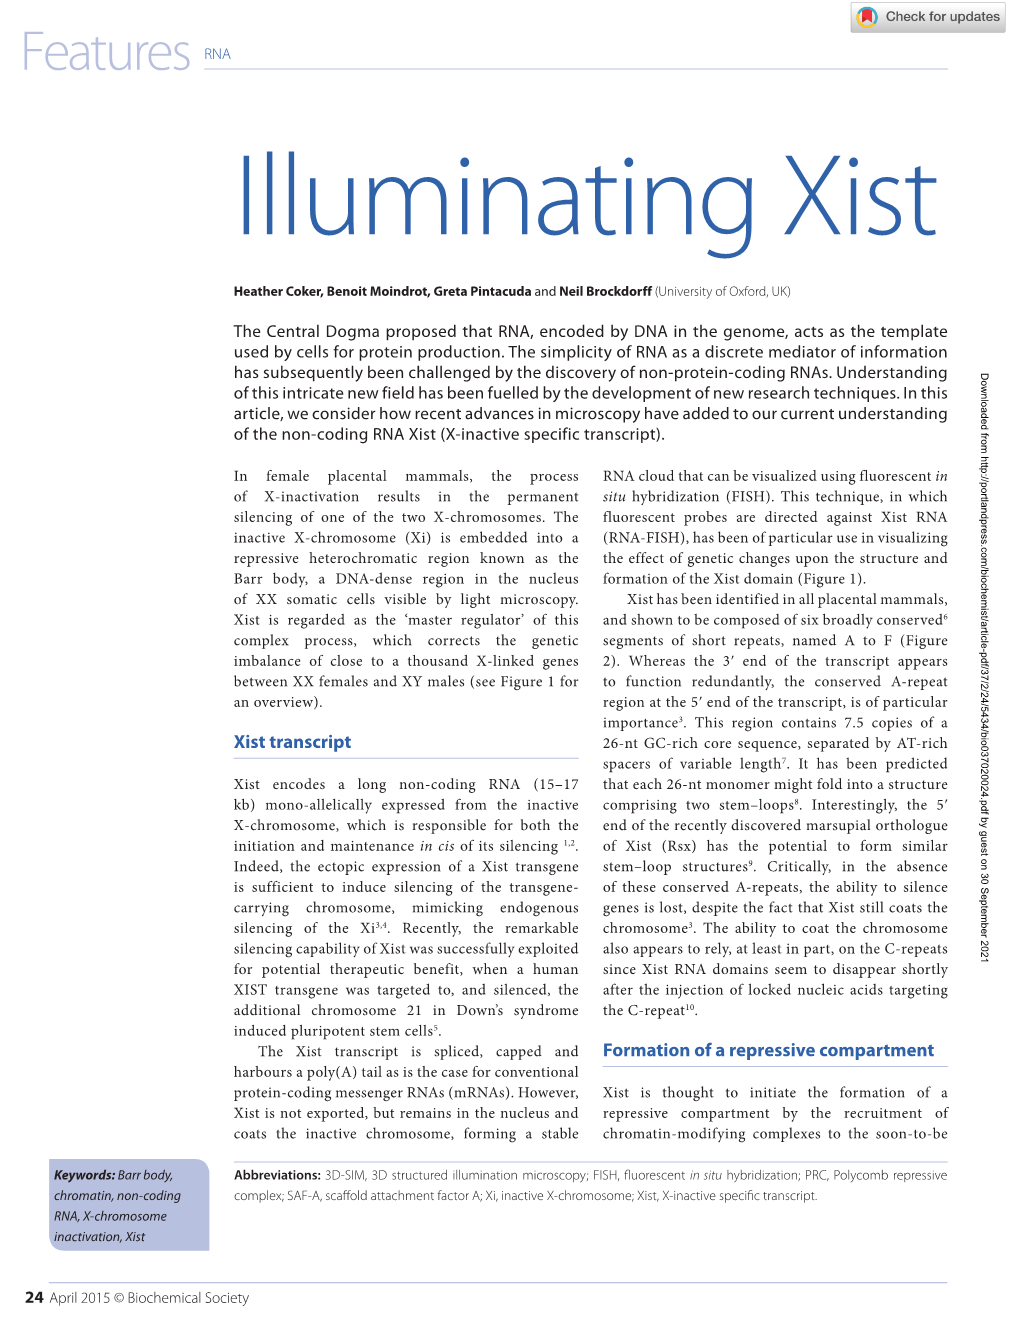 Features RNA Illuminating Xist